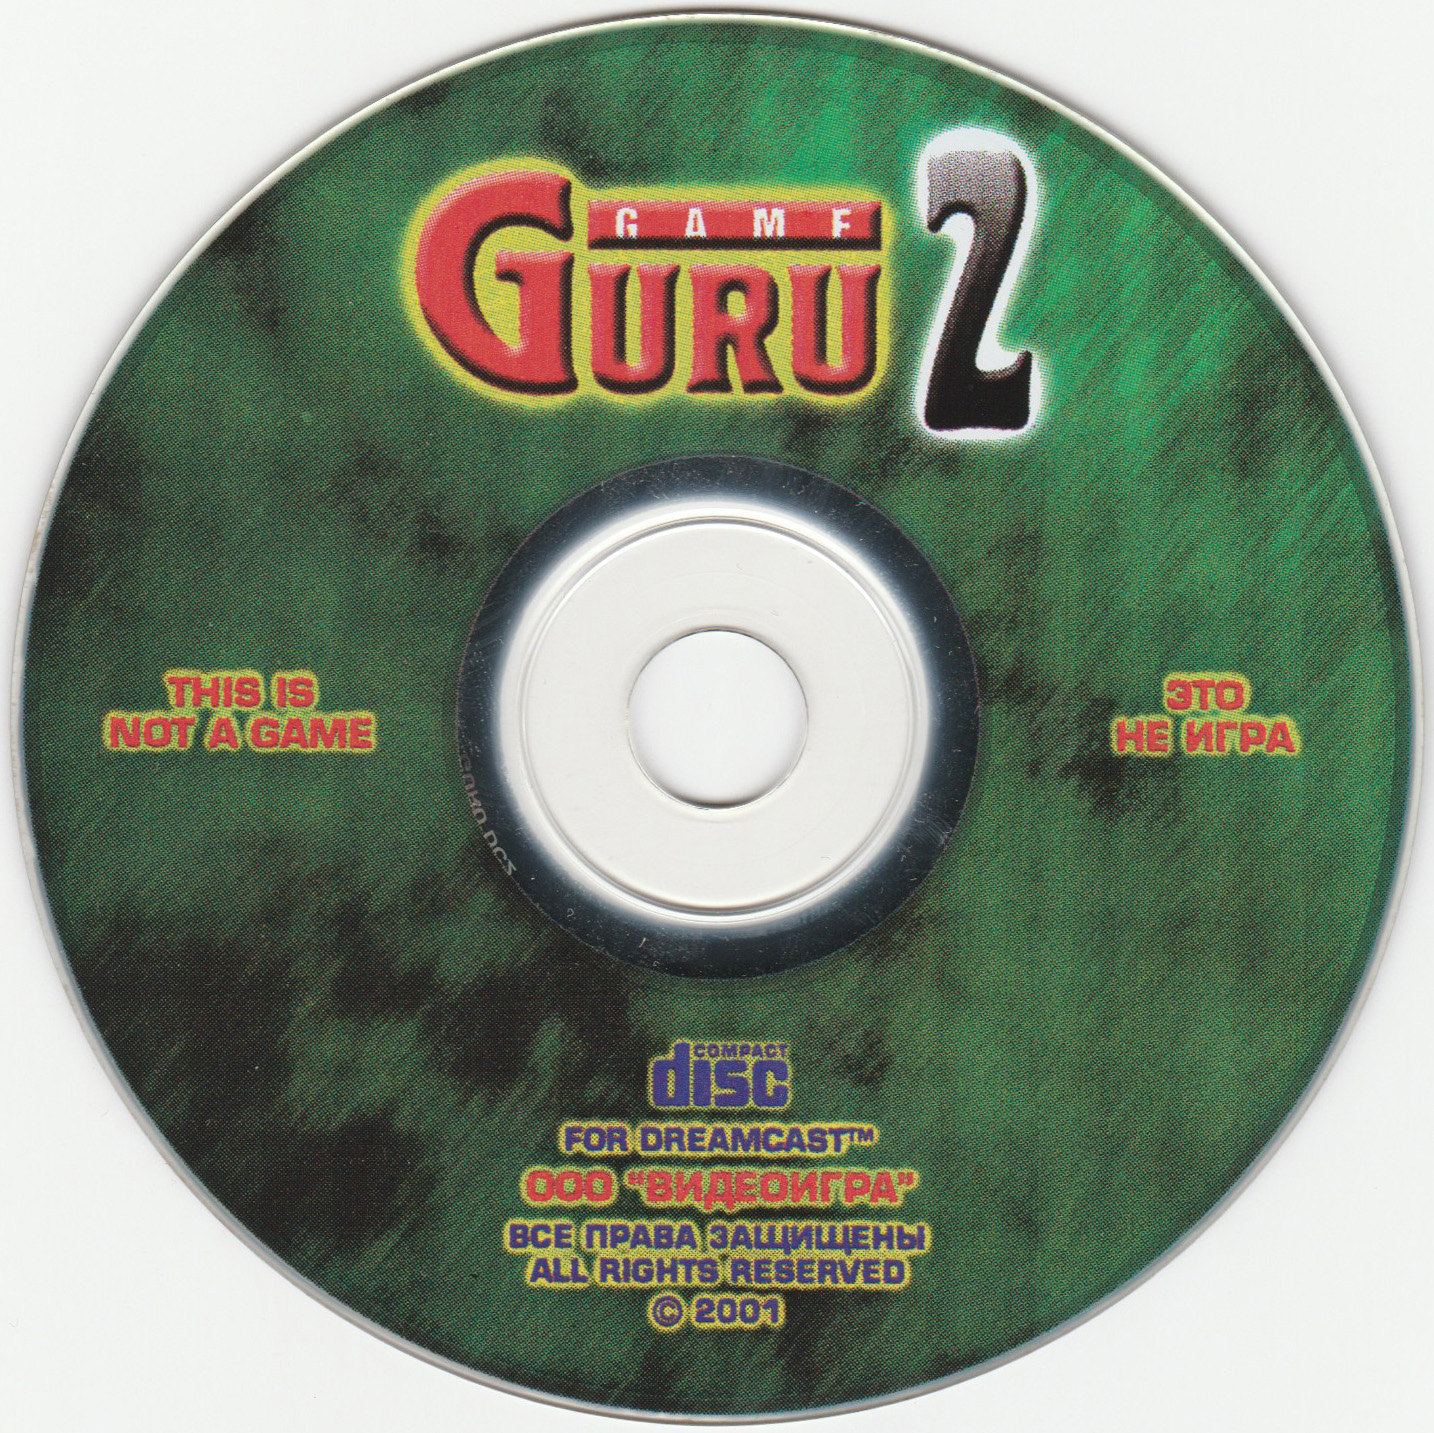 Игра guru ответы. GAMEGURU Dreamcast. GAMEGURU 4 Dreamcast. Обложка game Guru 7. Game Guru 9.